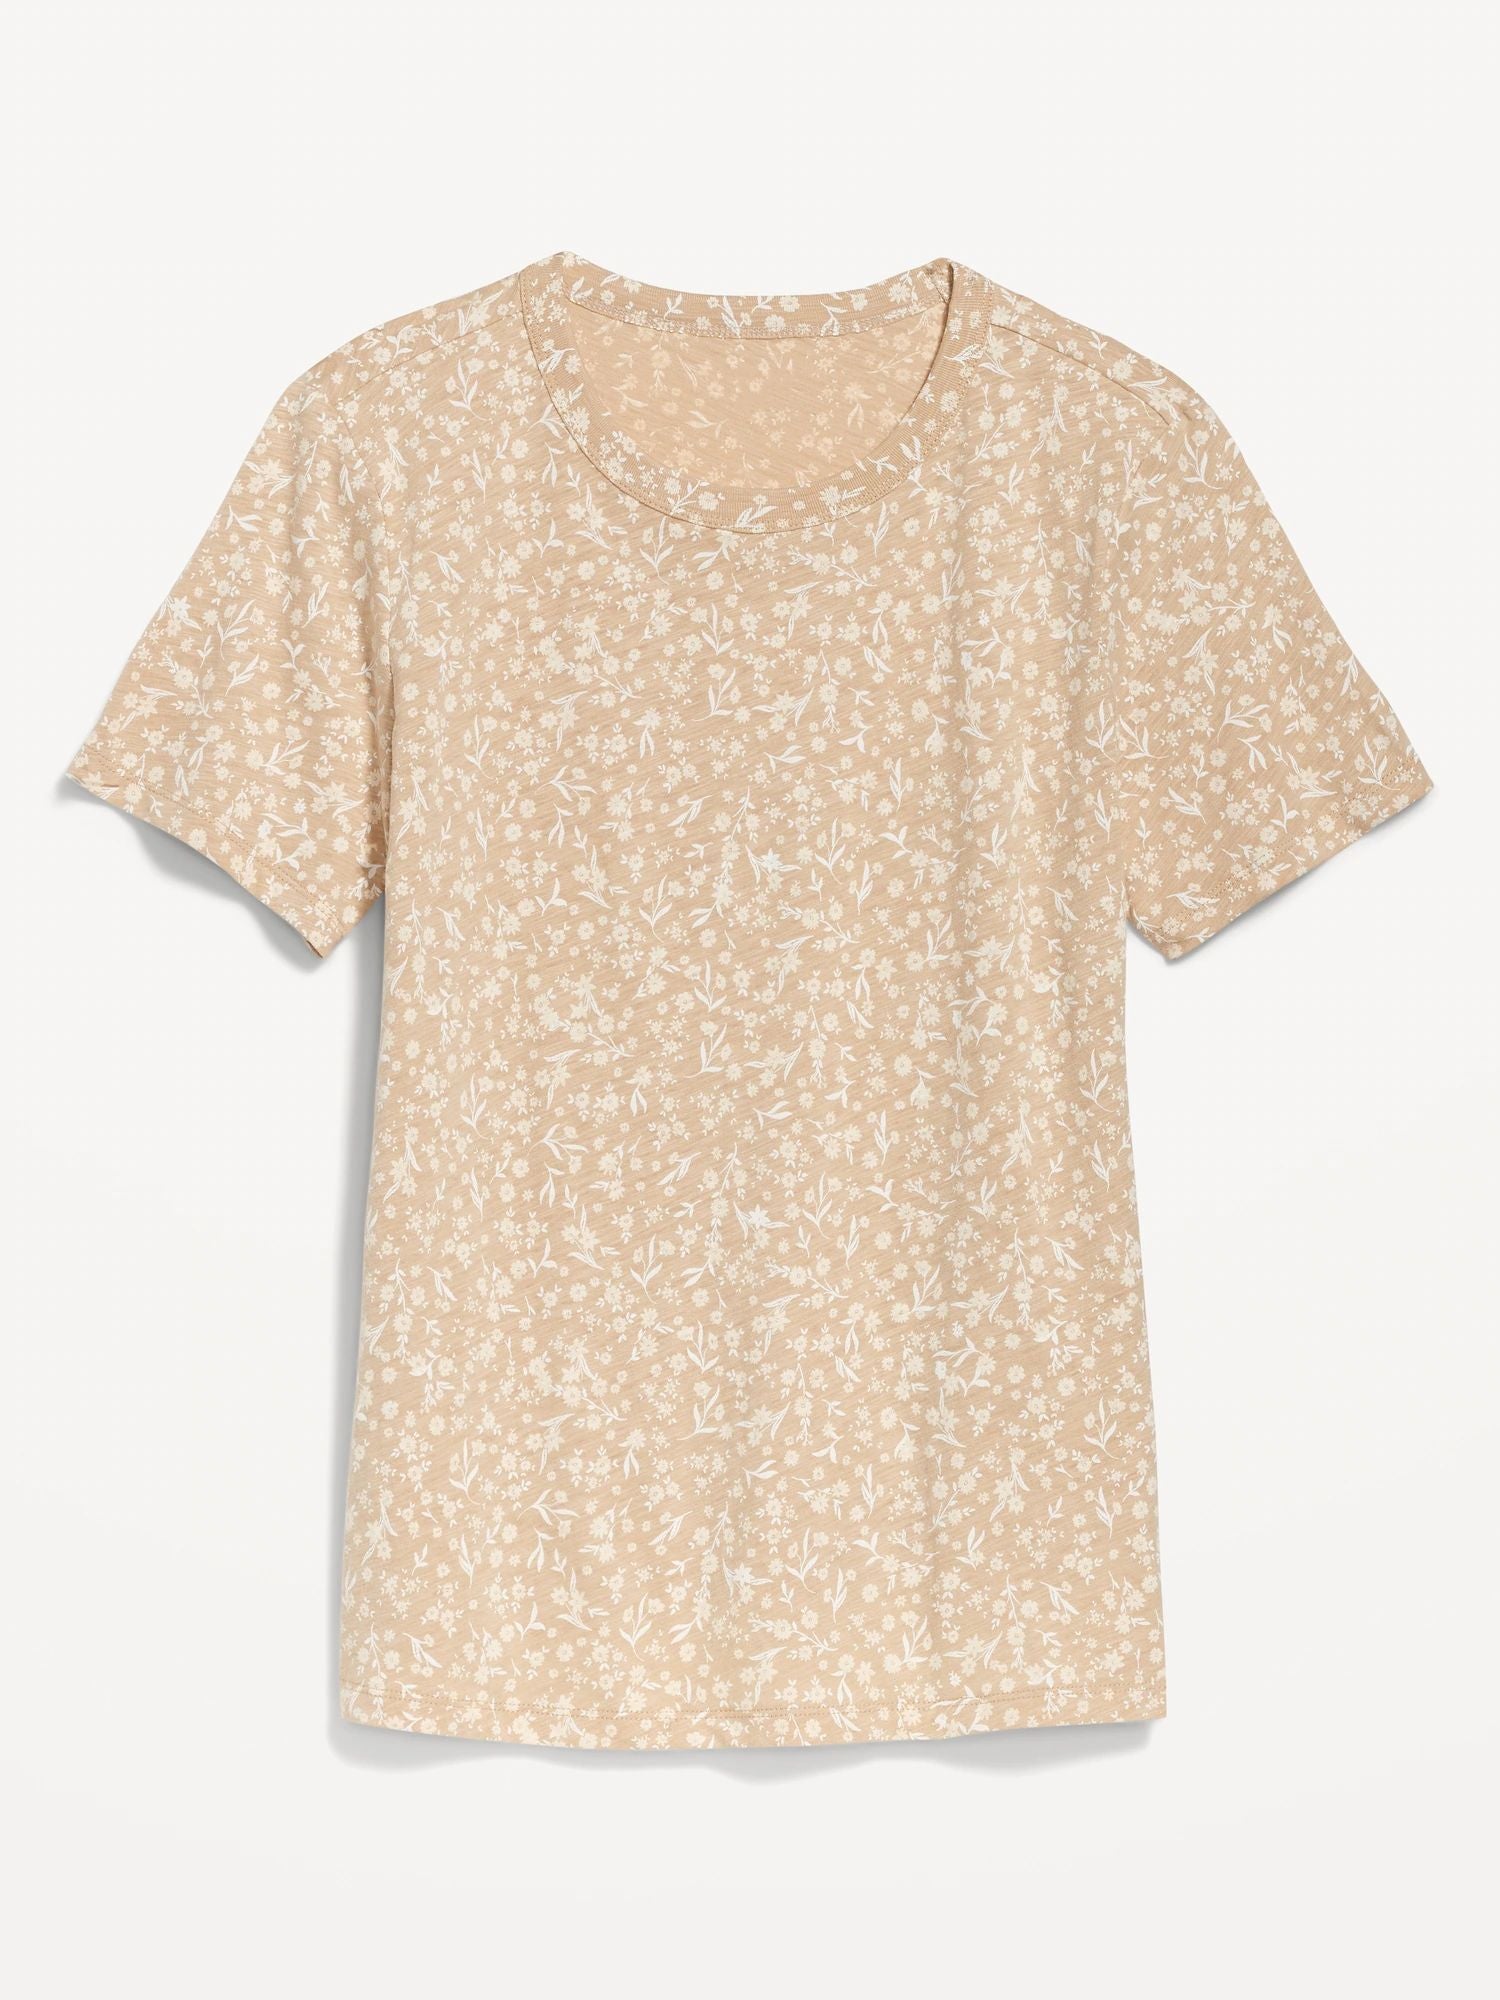 EveryWear Printed Slub-Knit T-Shirt for Women Desert Floor